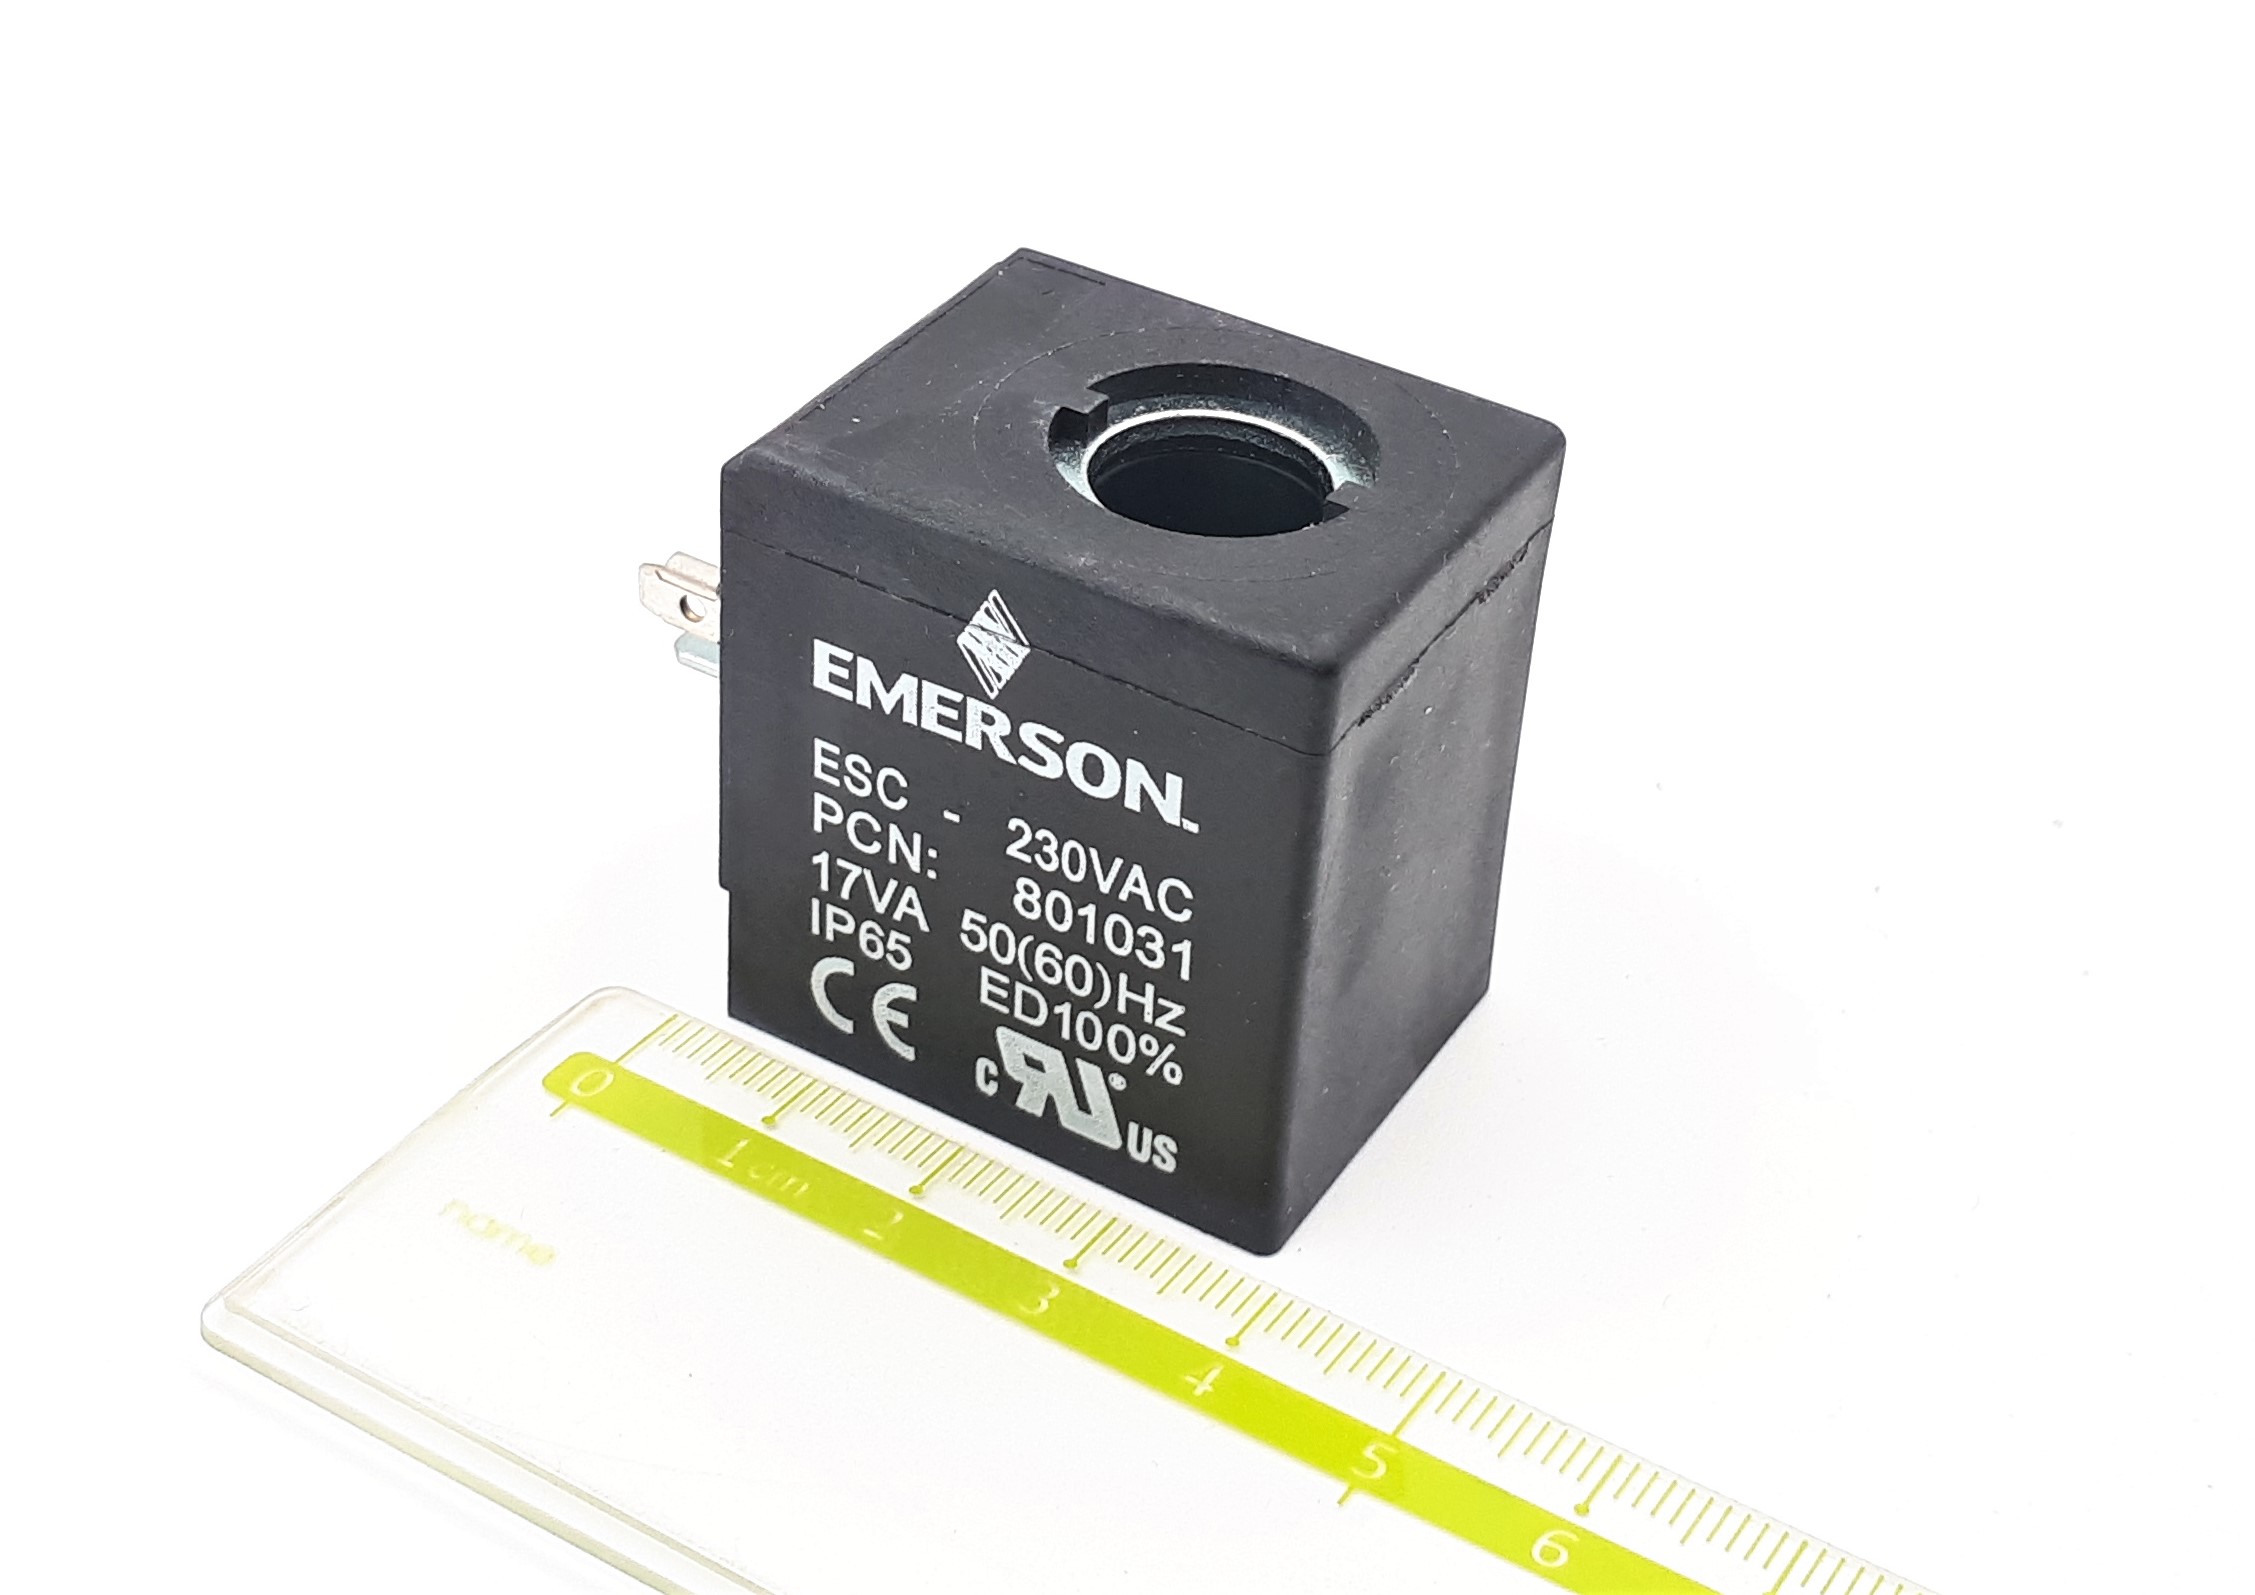 ESC-230VAC (ASC3 230) 17VA 230VAC 50/60Hz Emerson катушка электромагнитная